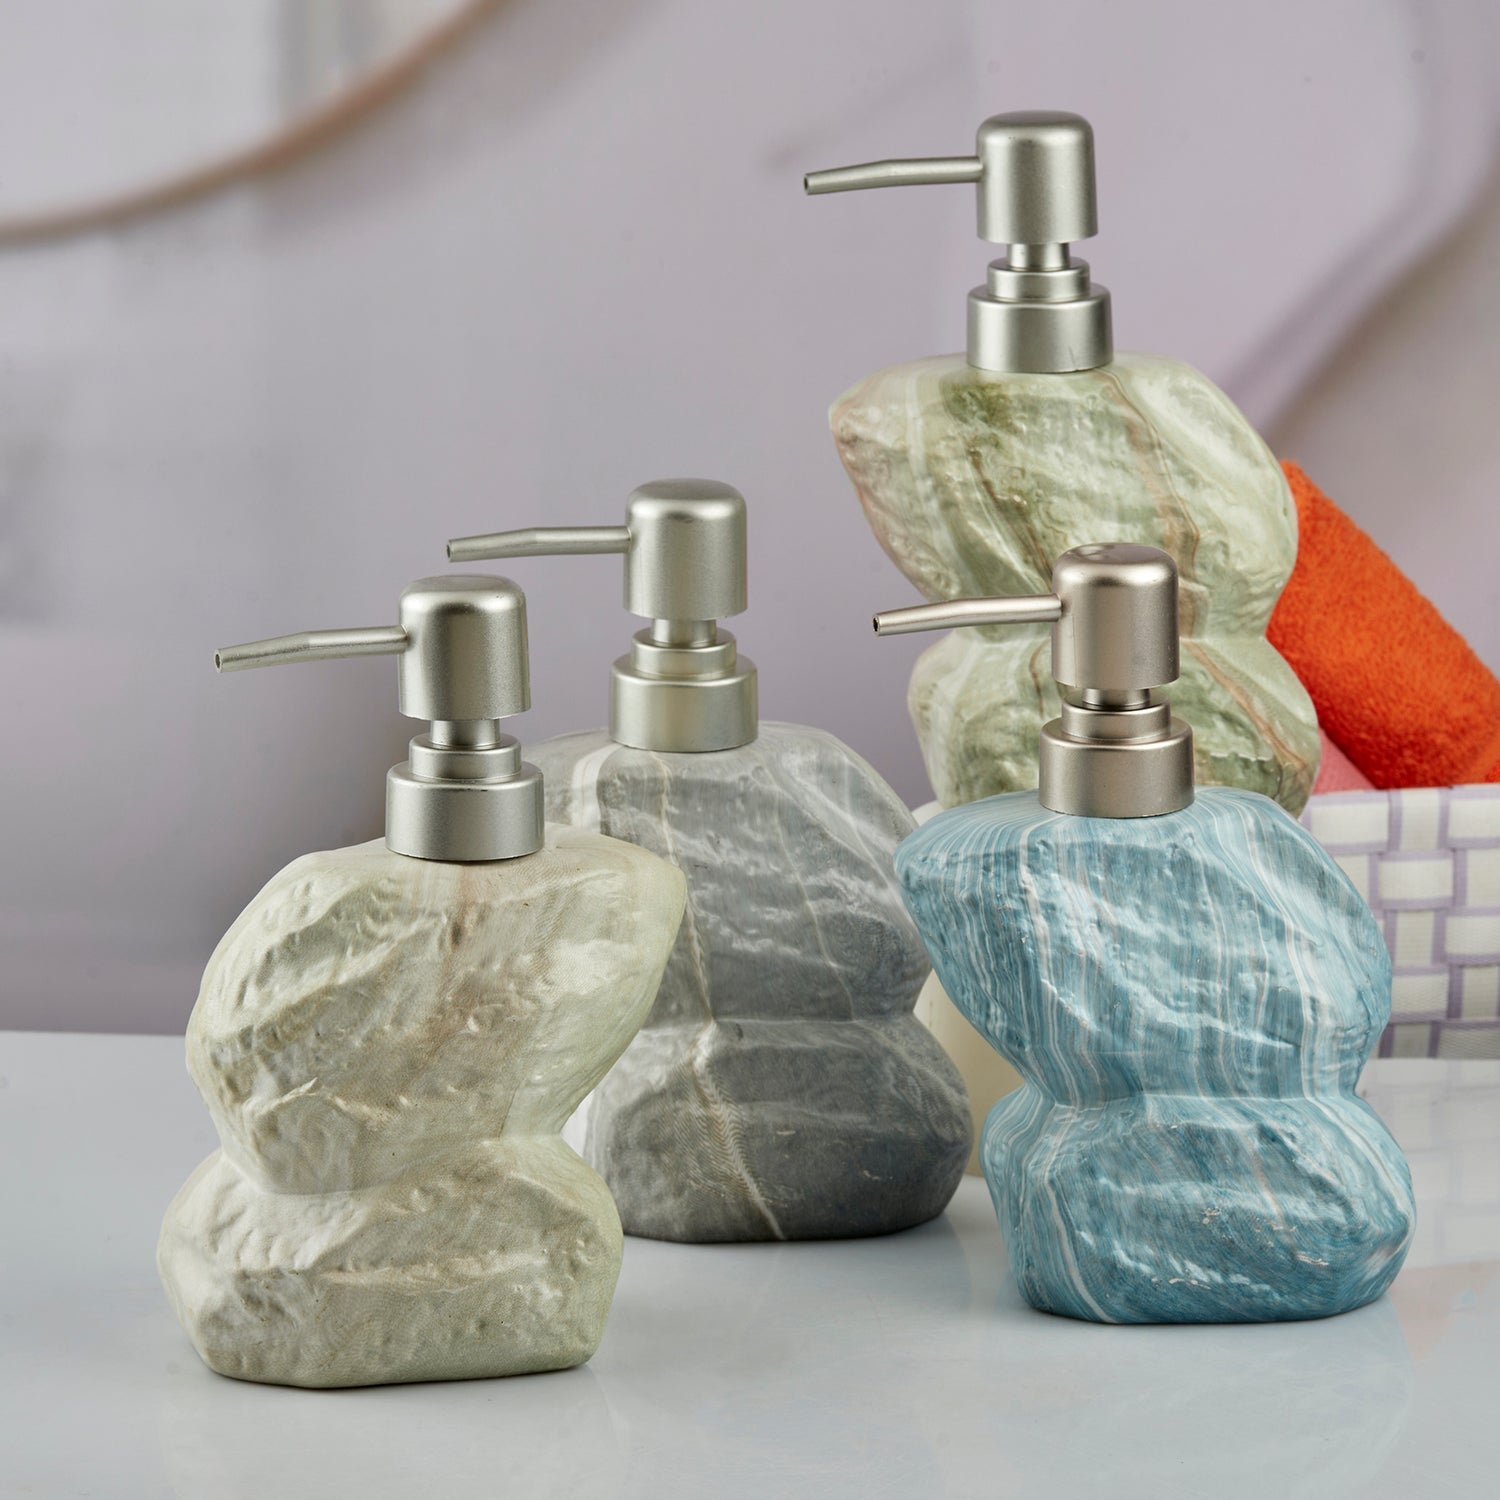 Ceramic Soap Dispenser Pump for Bathroom for Bath Gel, Lotion, Shampoo (7629)